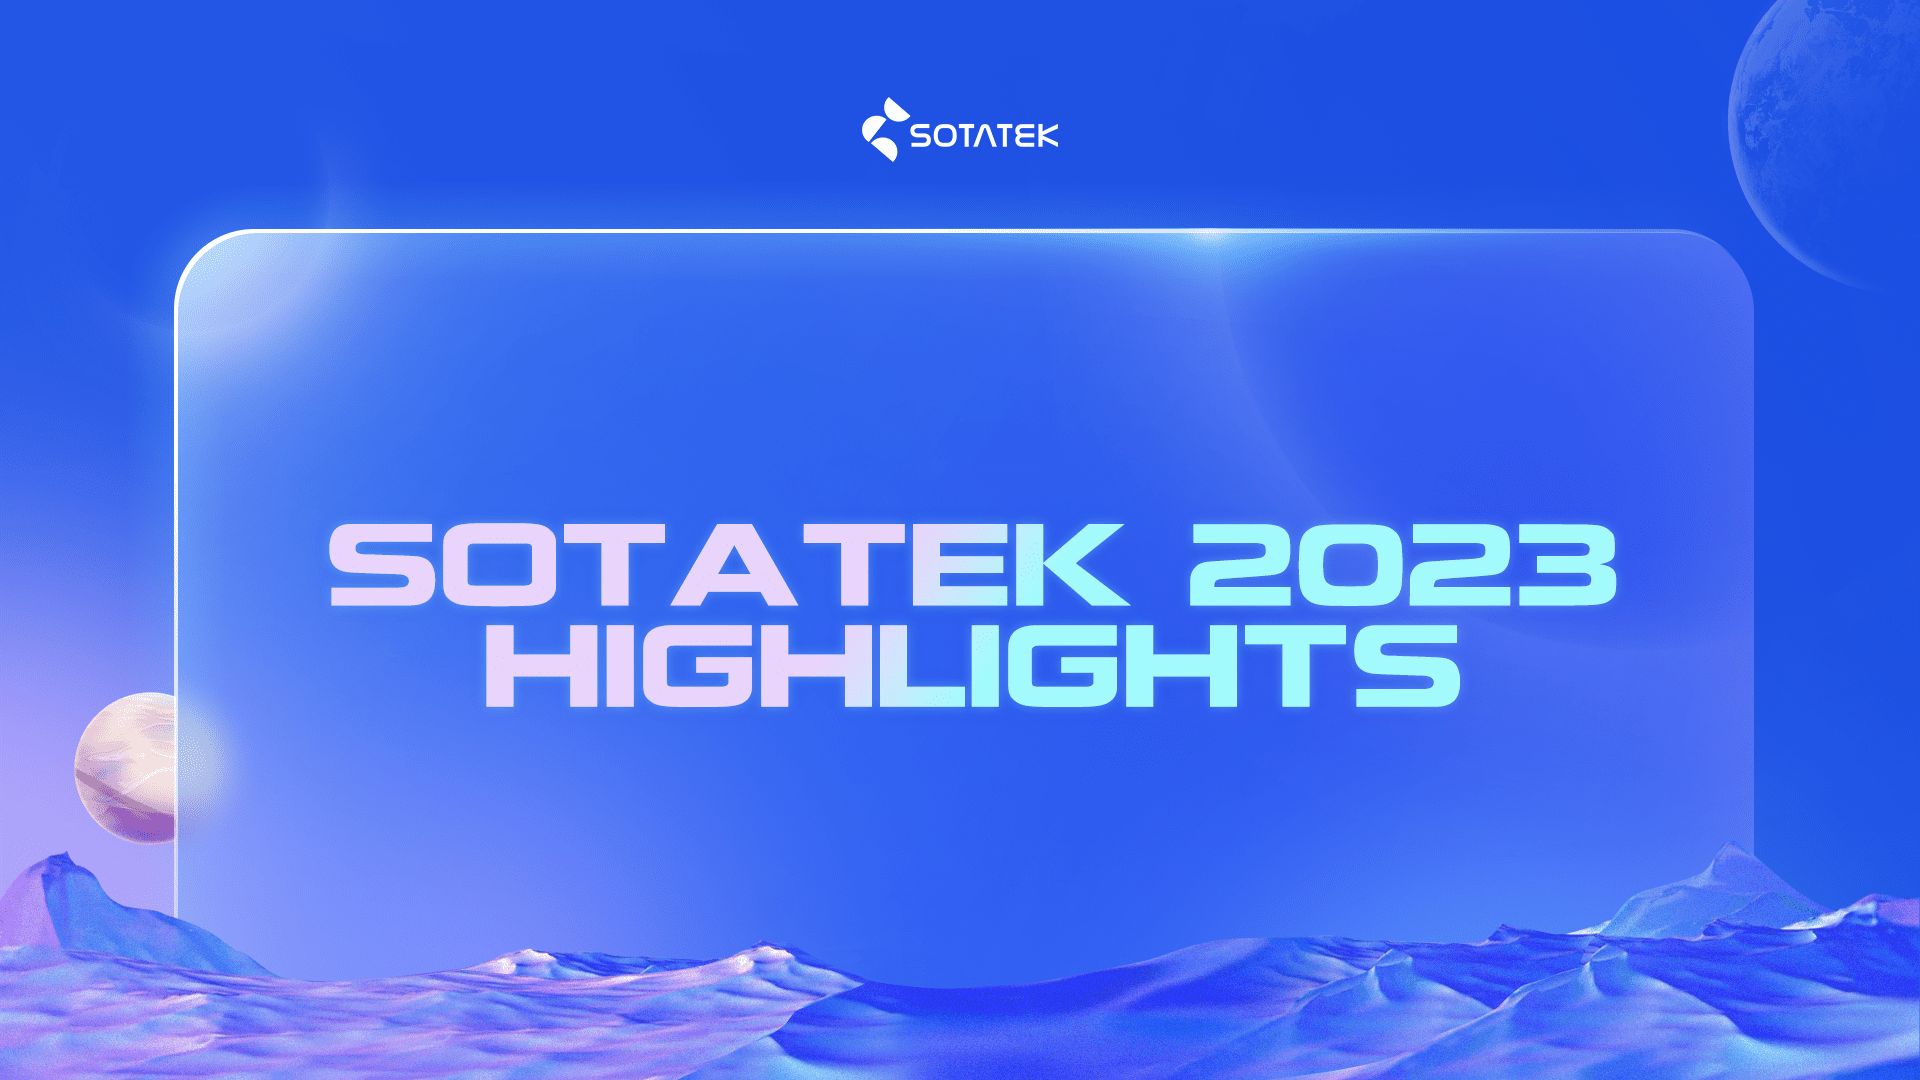 SotaTek 2023 Highlights